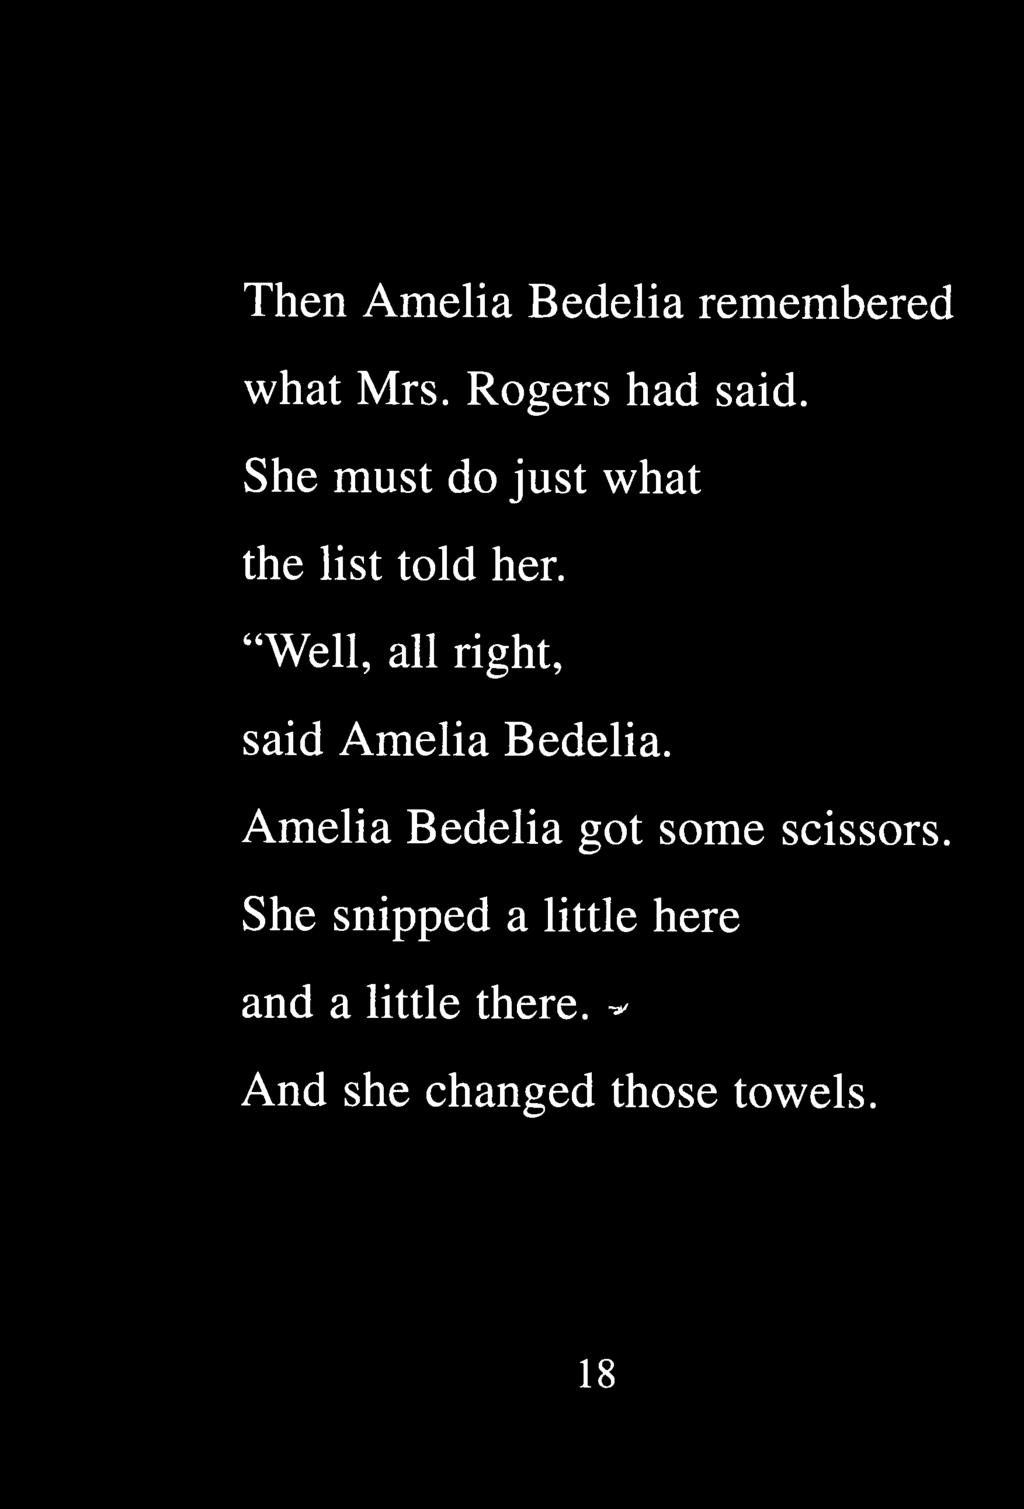 Amelia Bedelia got some scissors.